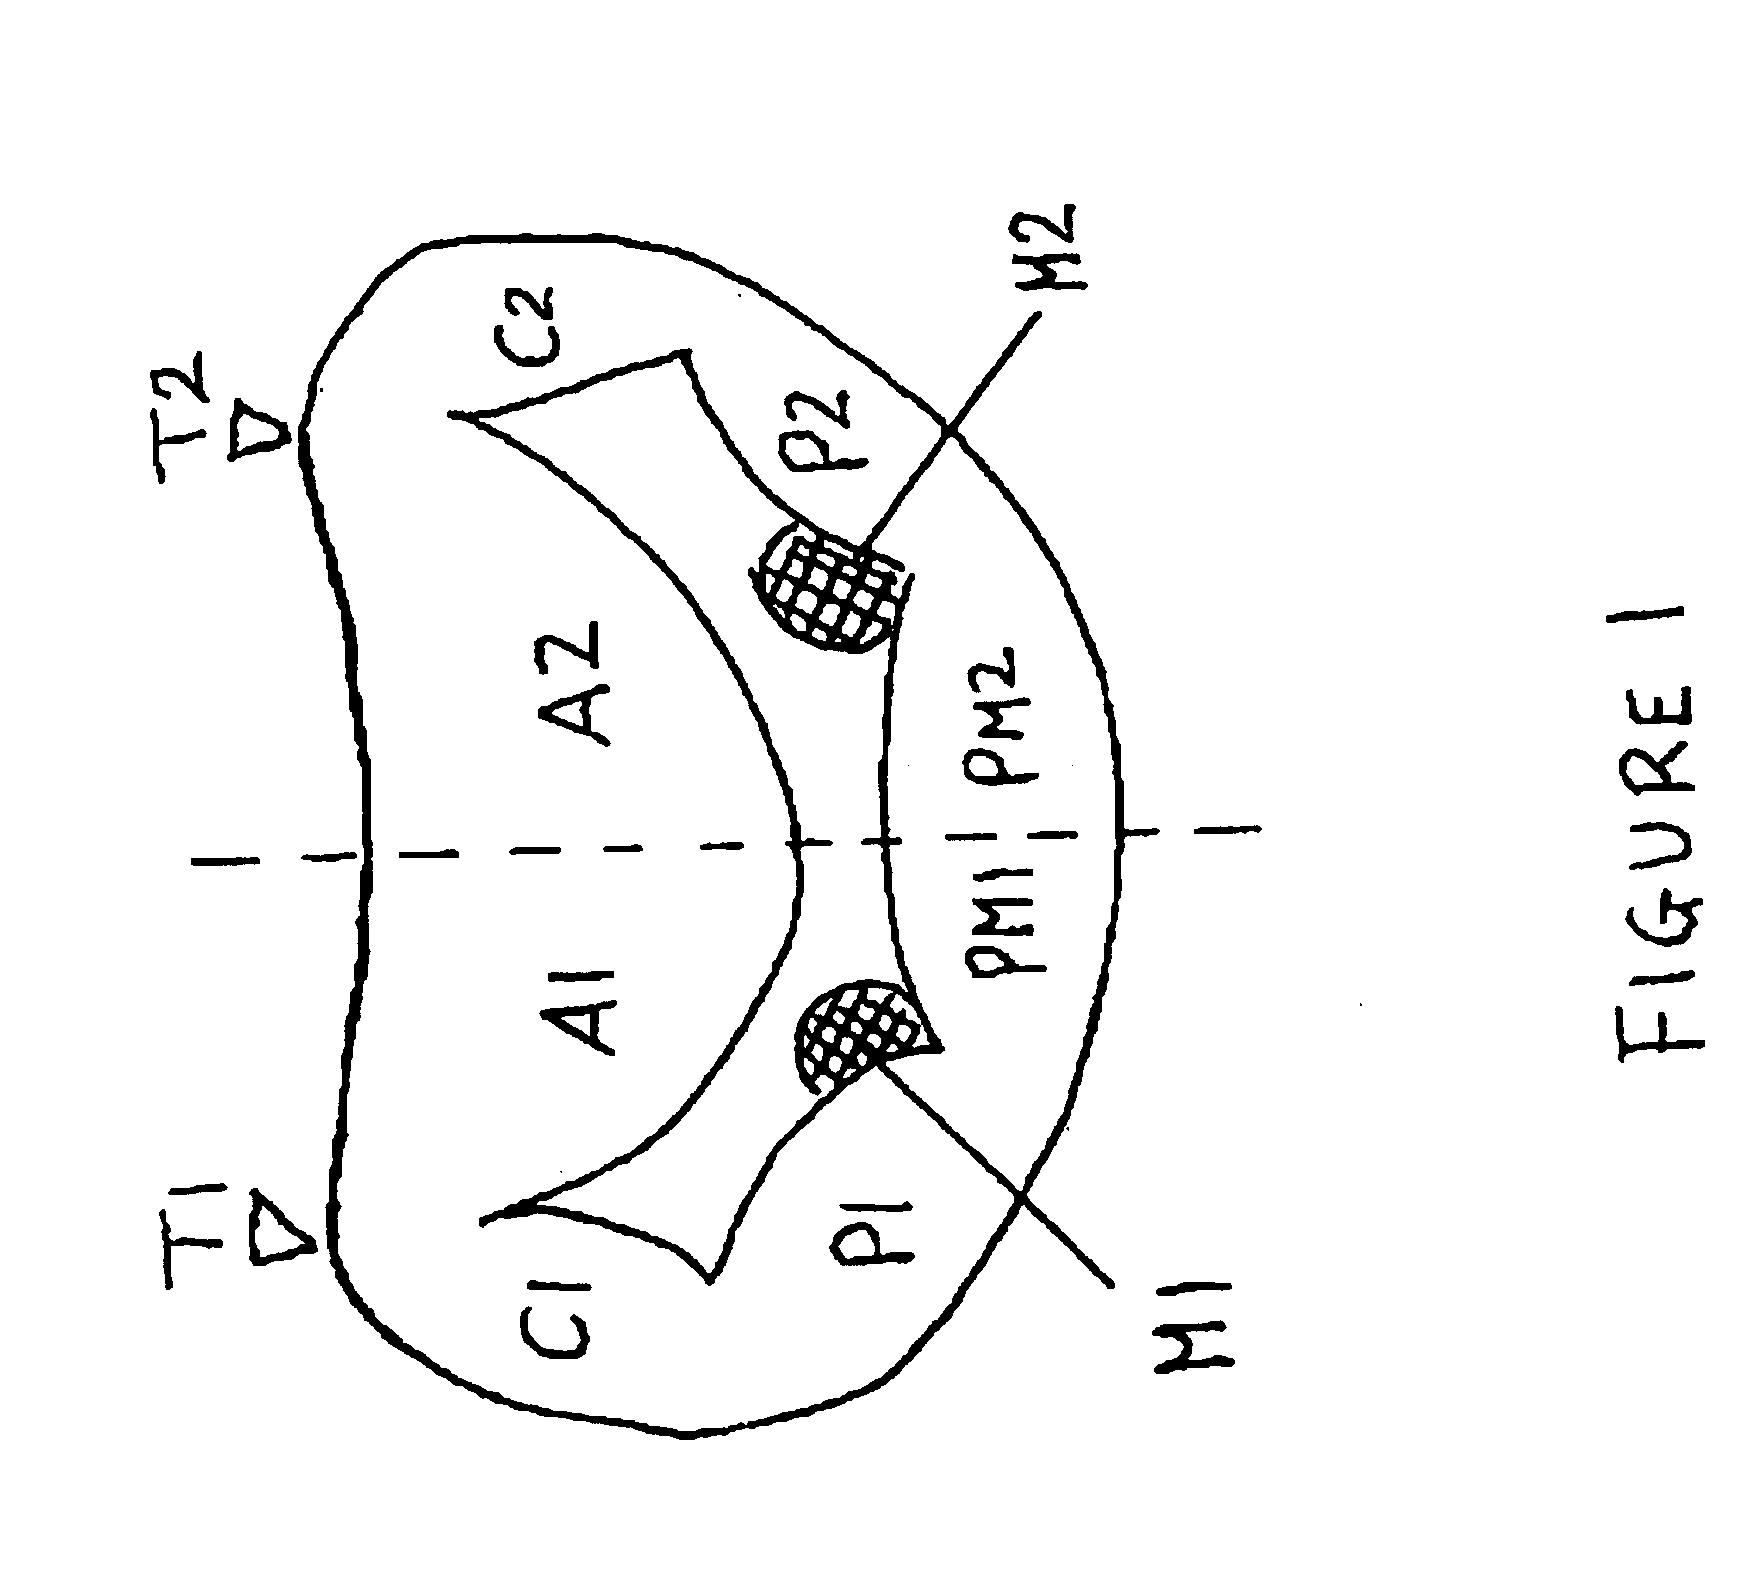 Papilloplasty band and sizing device